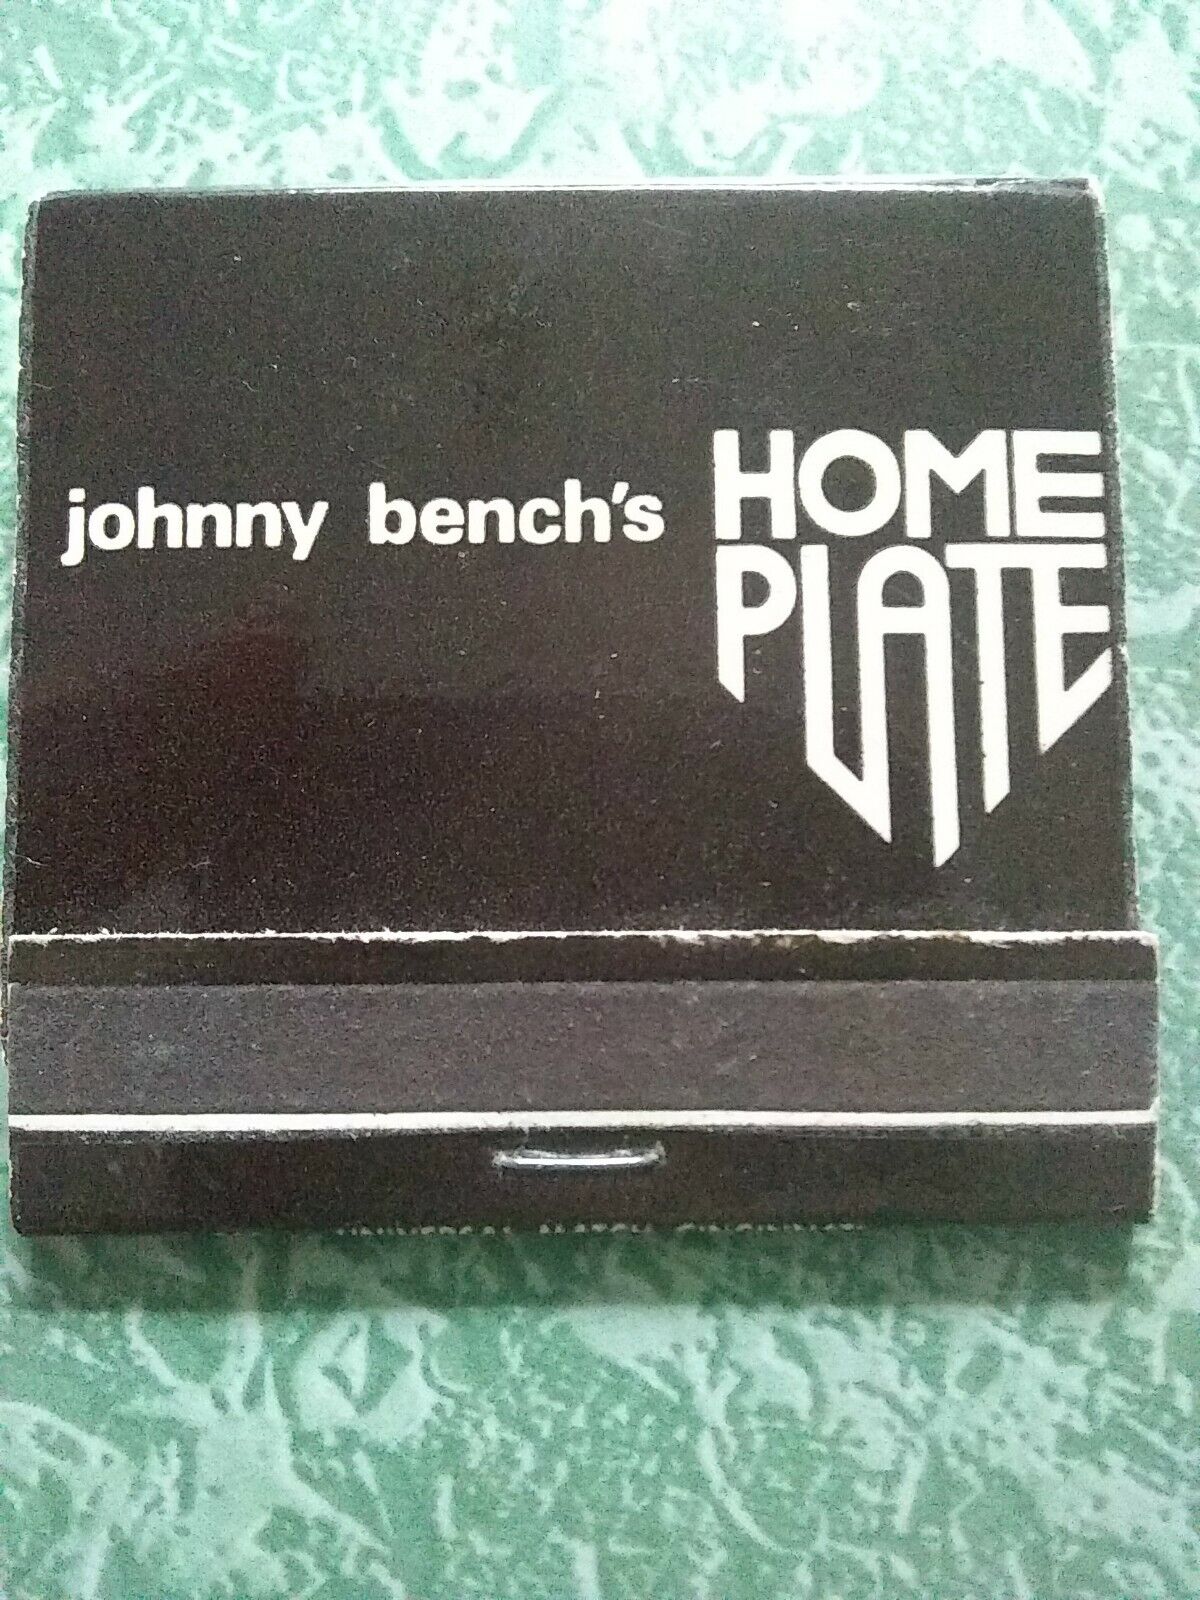 Vintage Matchbook F11 Collectible Ephemera Johnny bench Cincinnati reds Ohio 